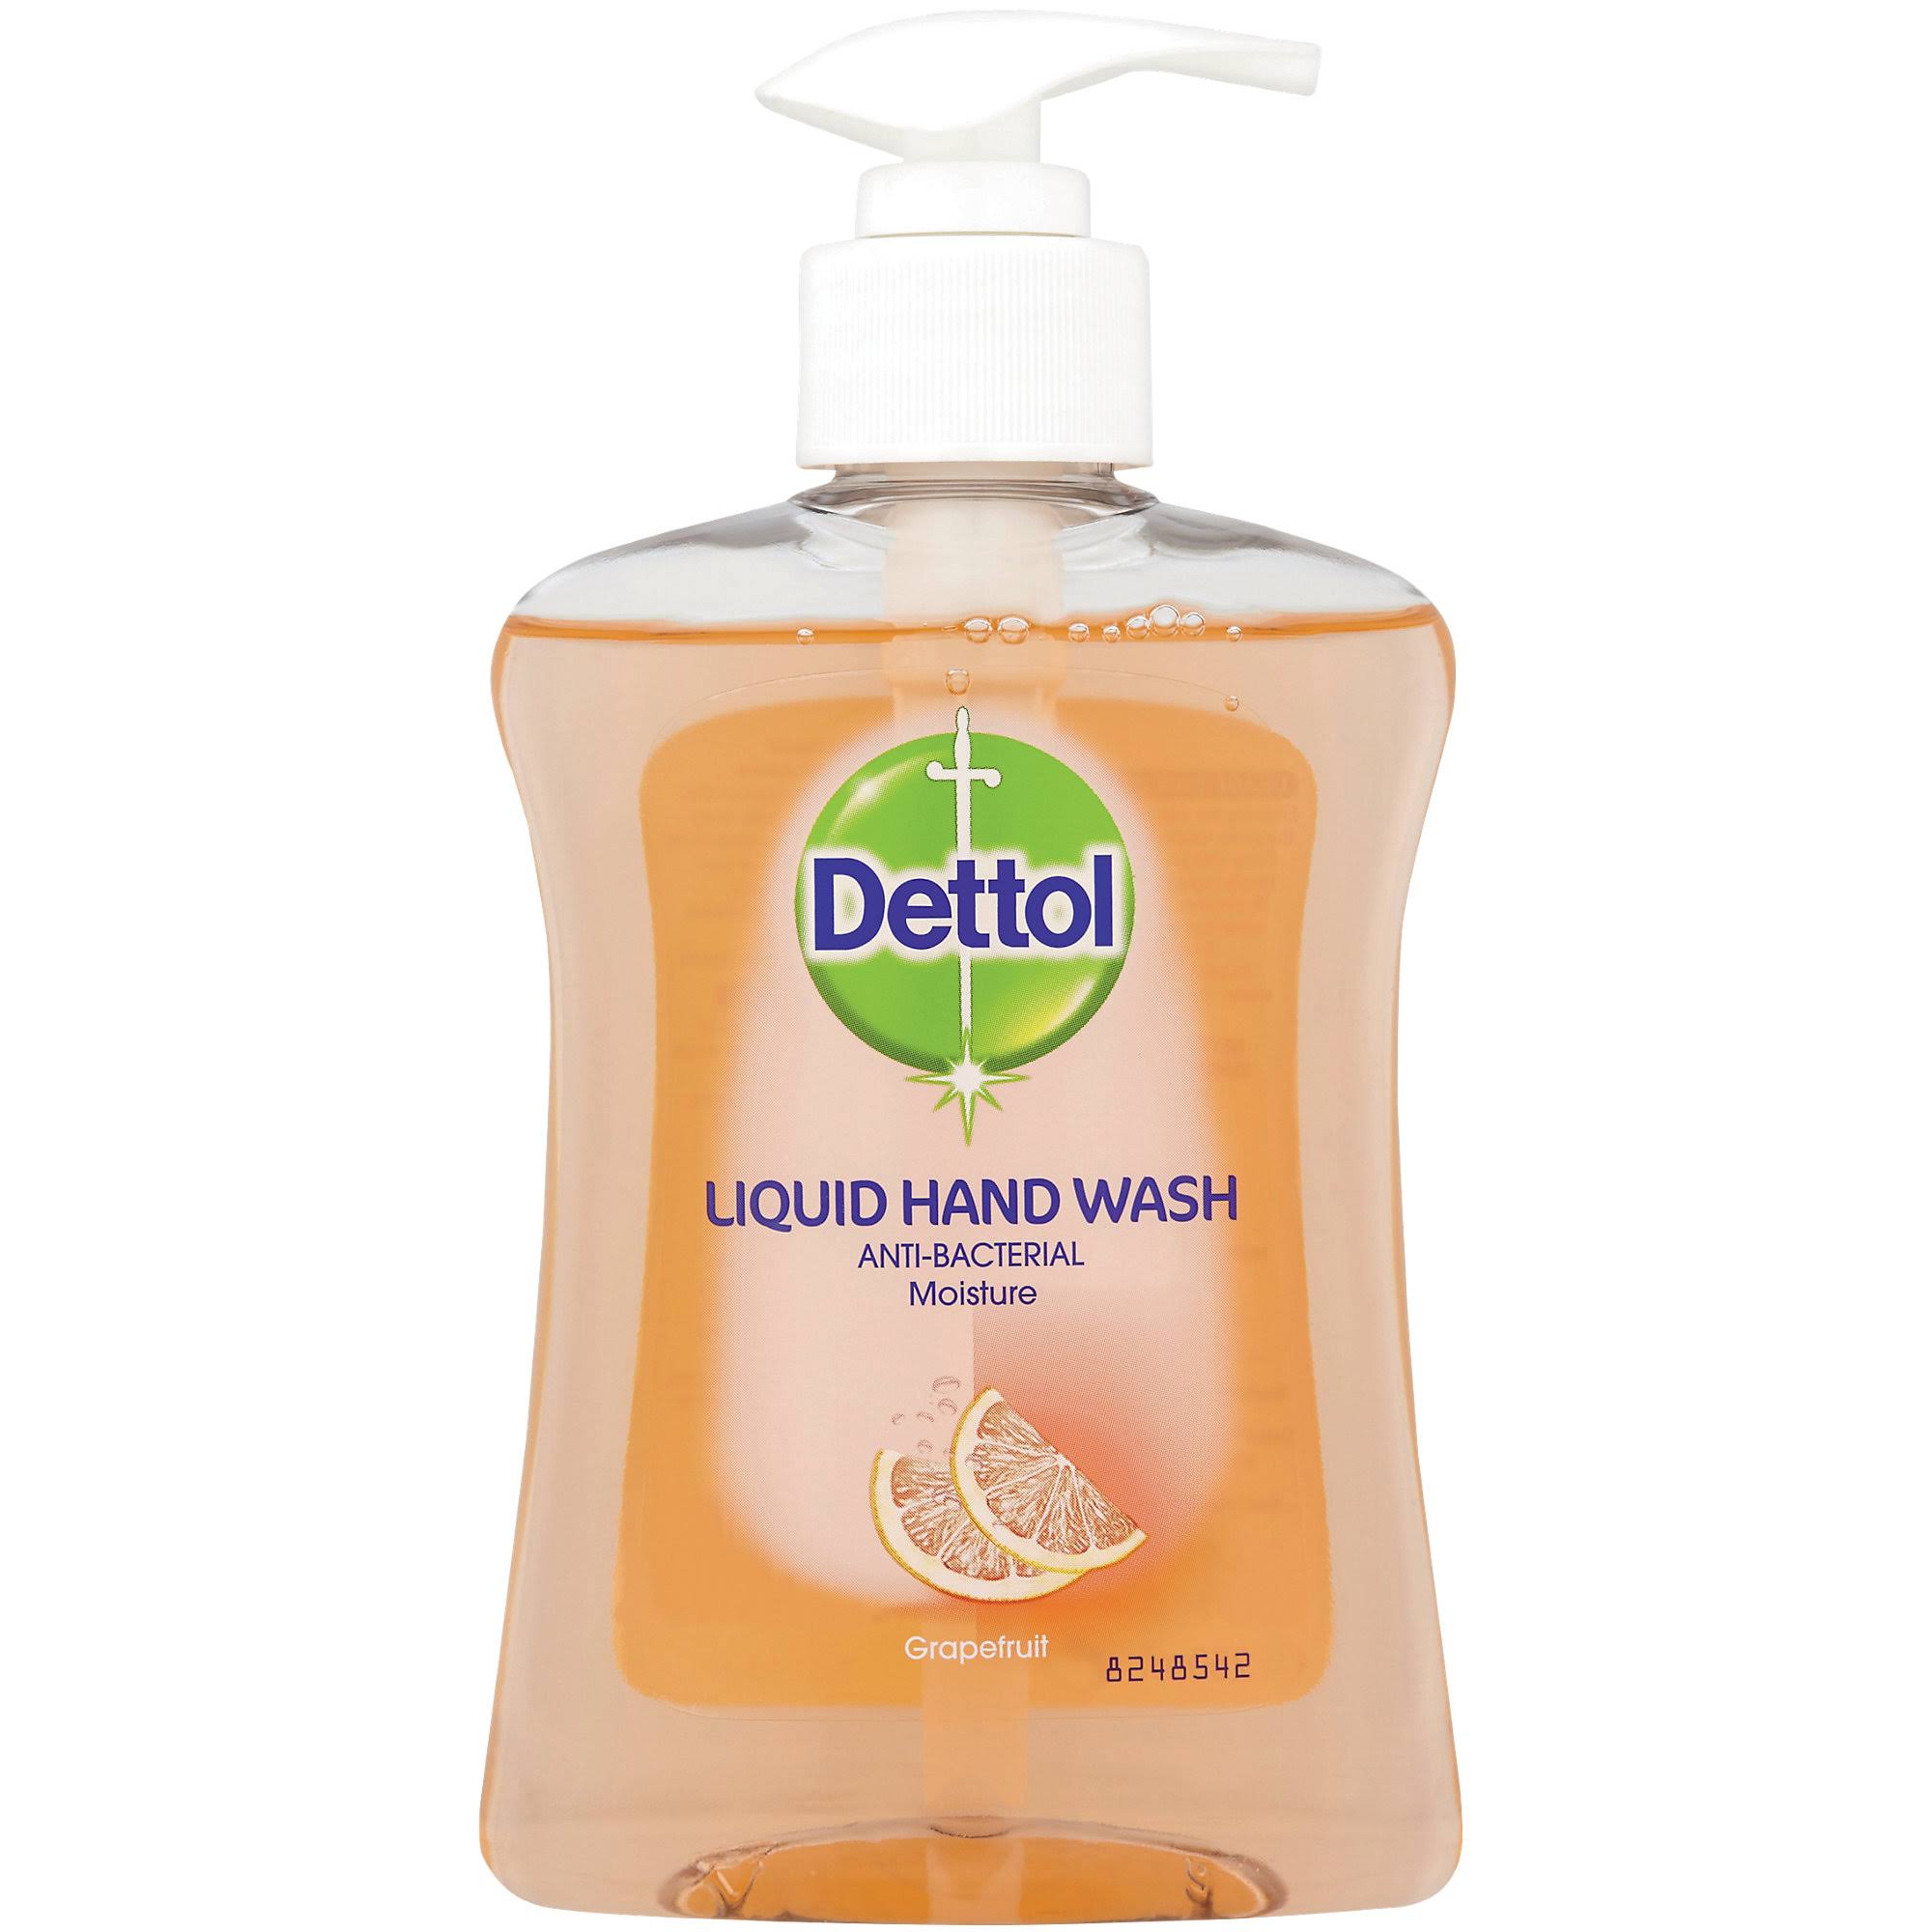 Dettol Anti-Bacterial Liquid Hand Wash - Moisture Aloe Vera, 250ml